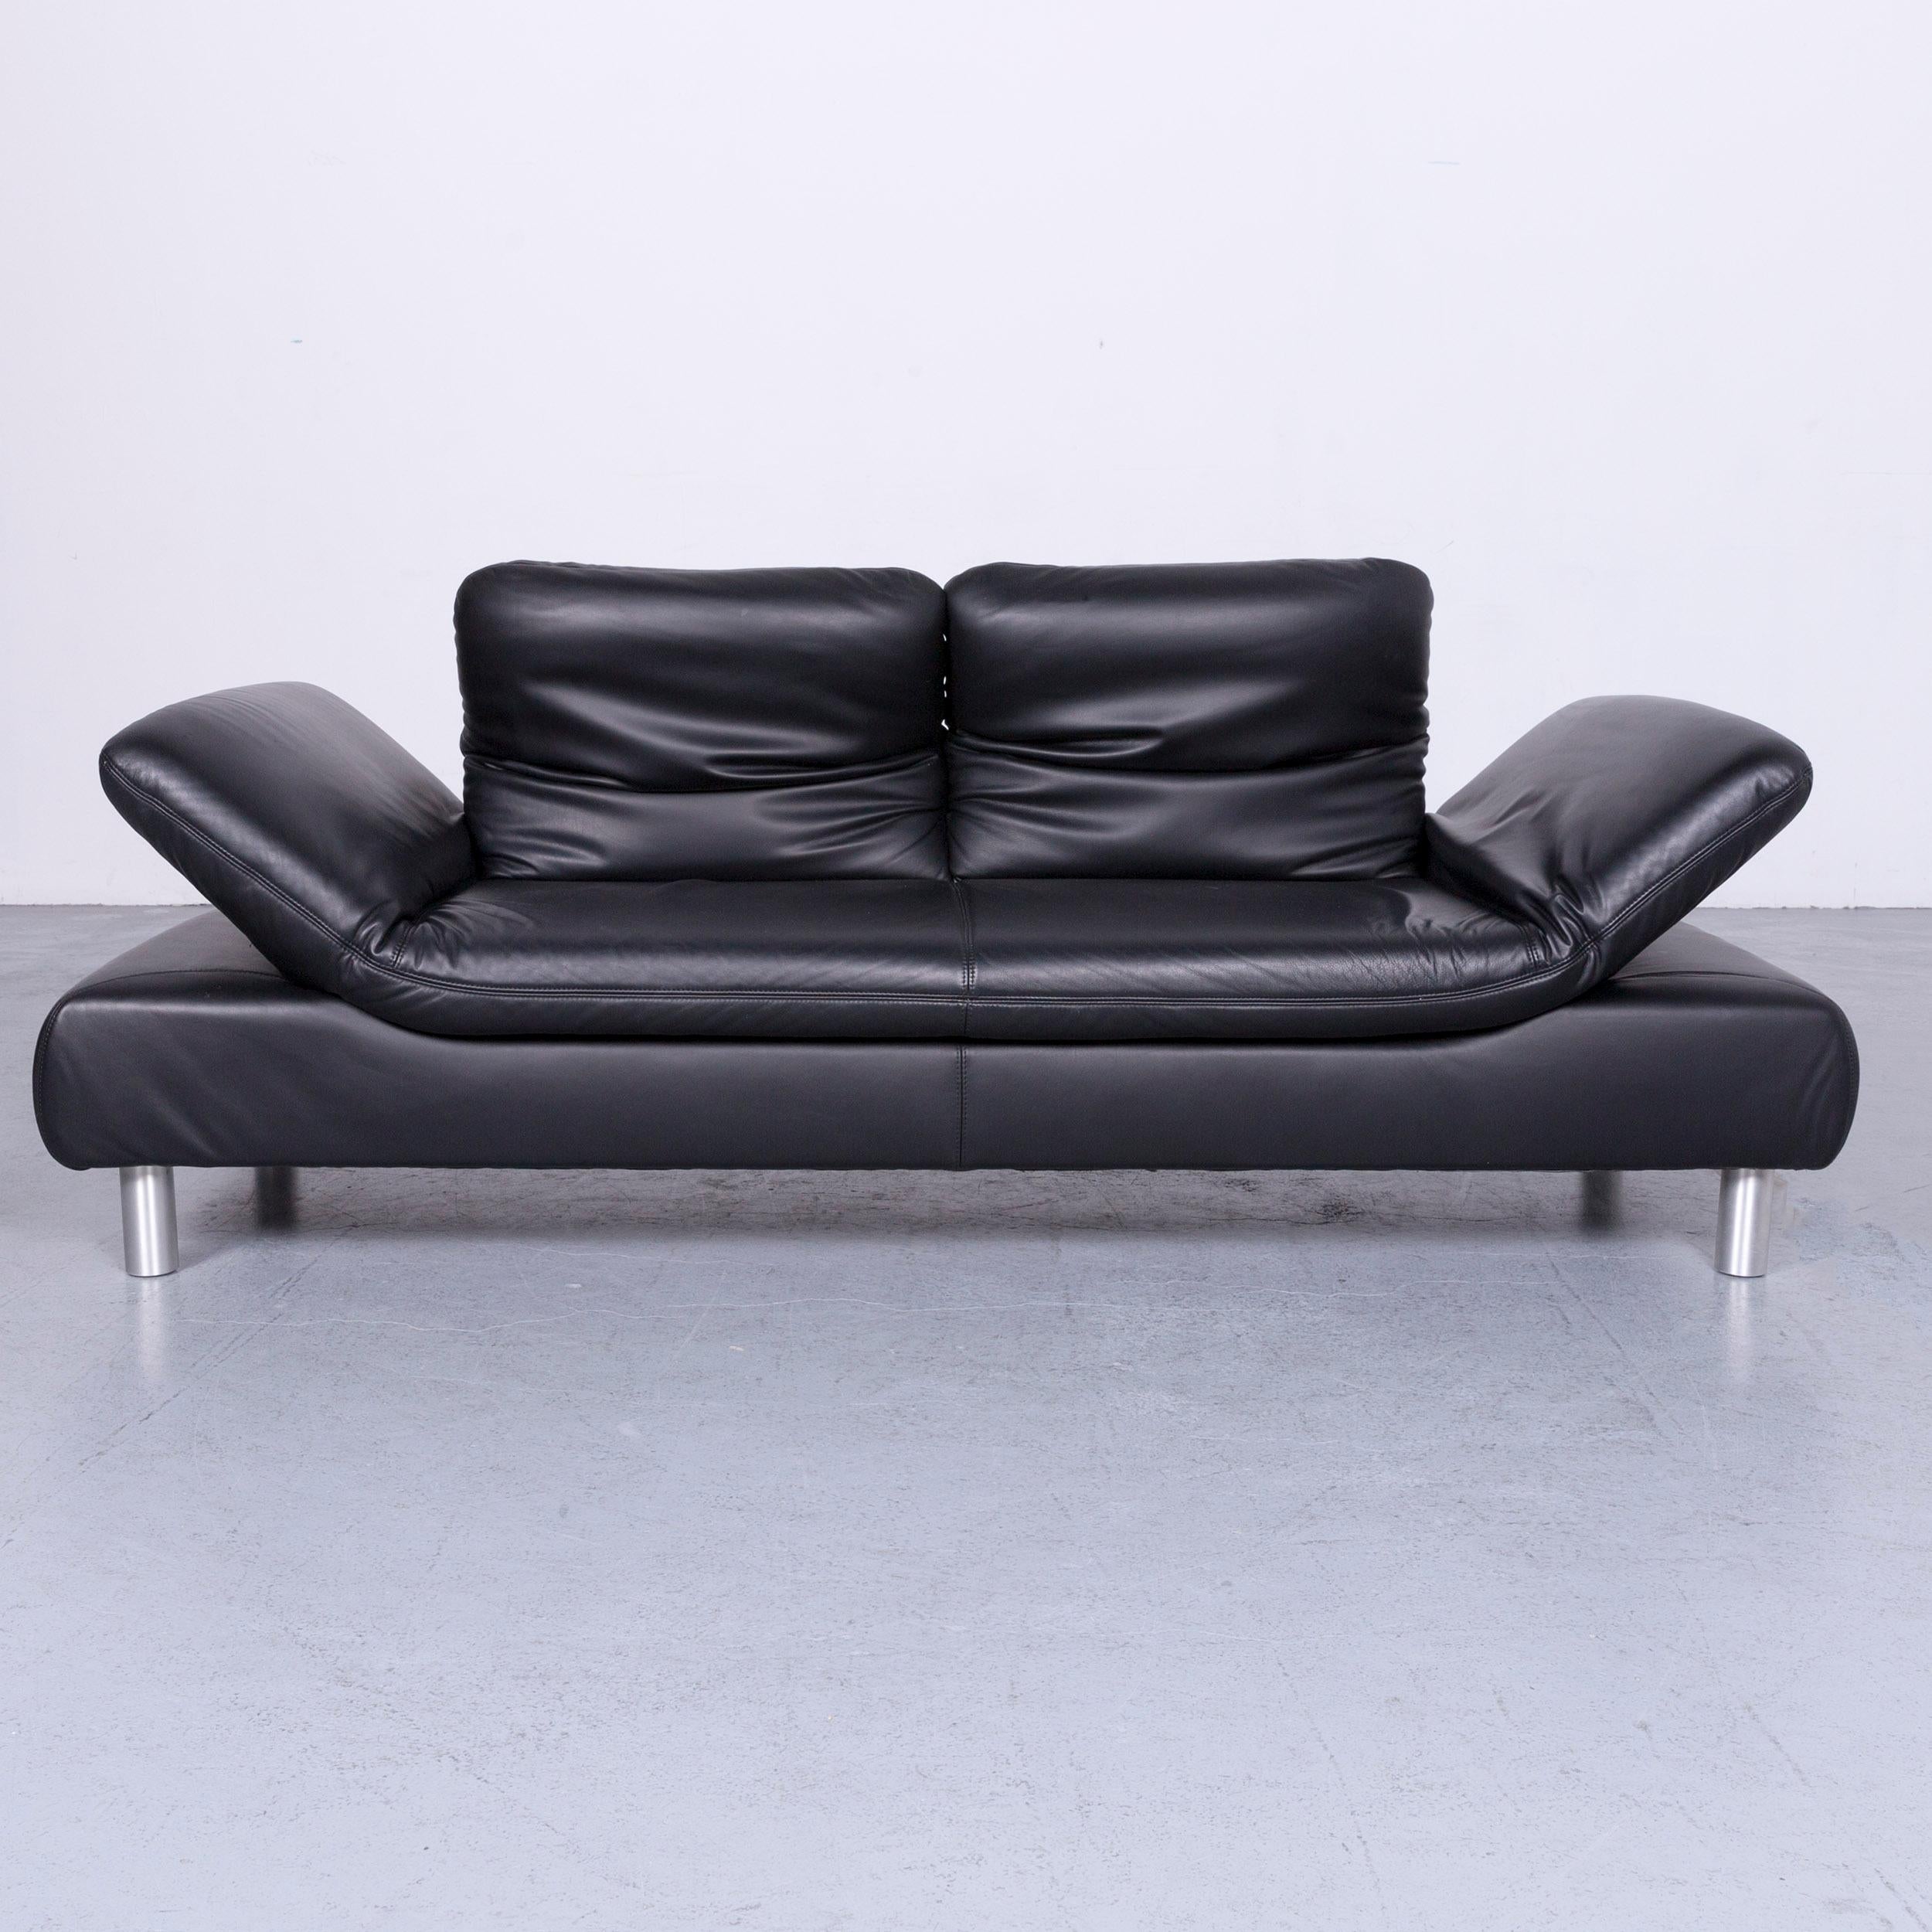 German Koinor Rivoli Designer Leather Three-Seat Sofa in Black with Functions